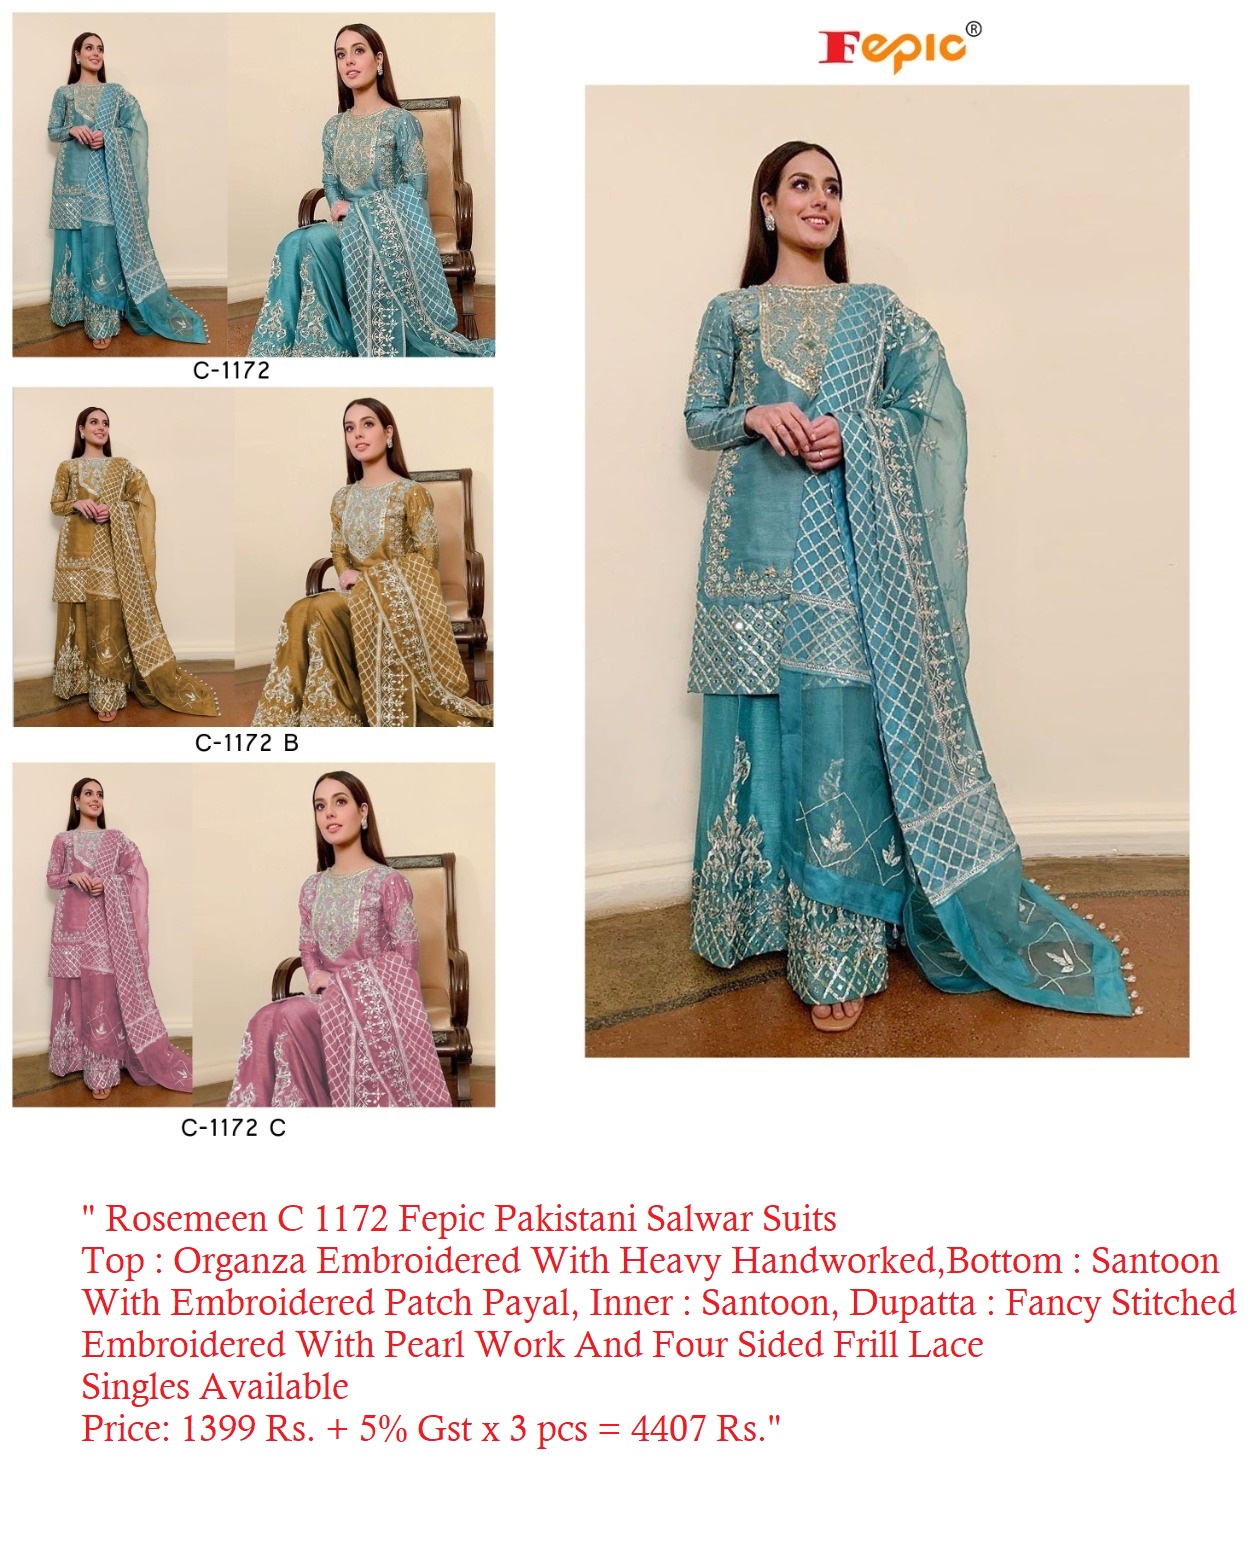 Rosemeen C 1172 Fepic Pakistani Salwar Suits Manufacturer Wholesaler